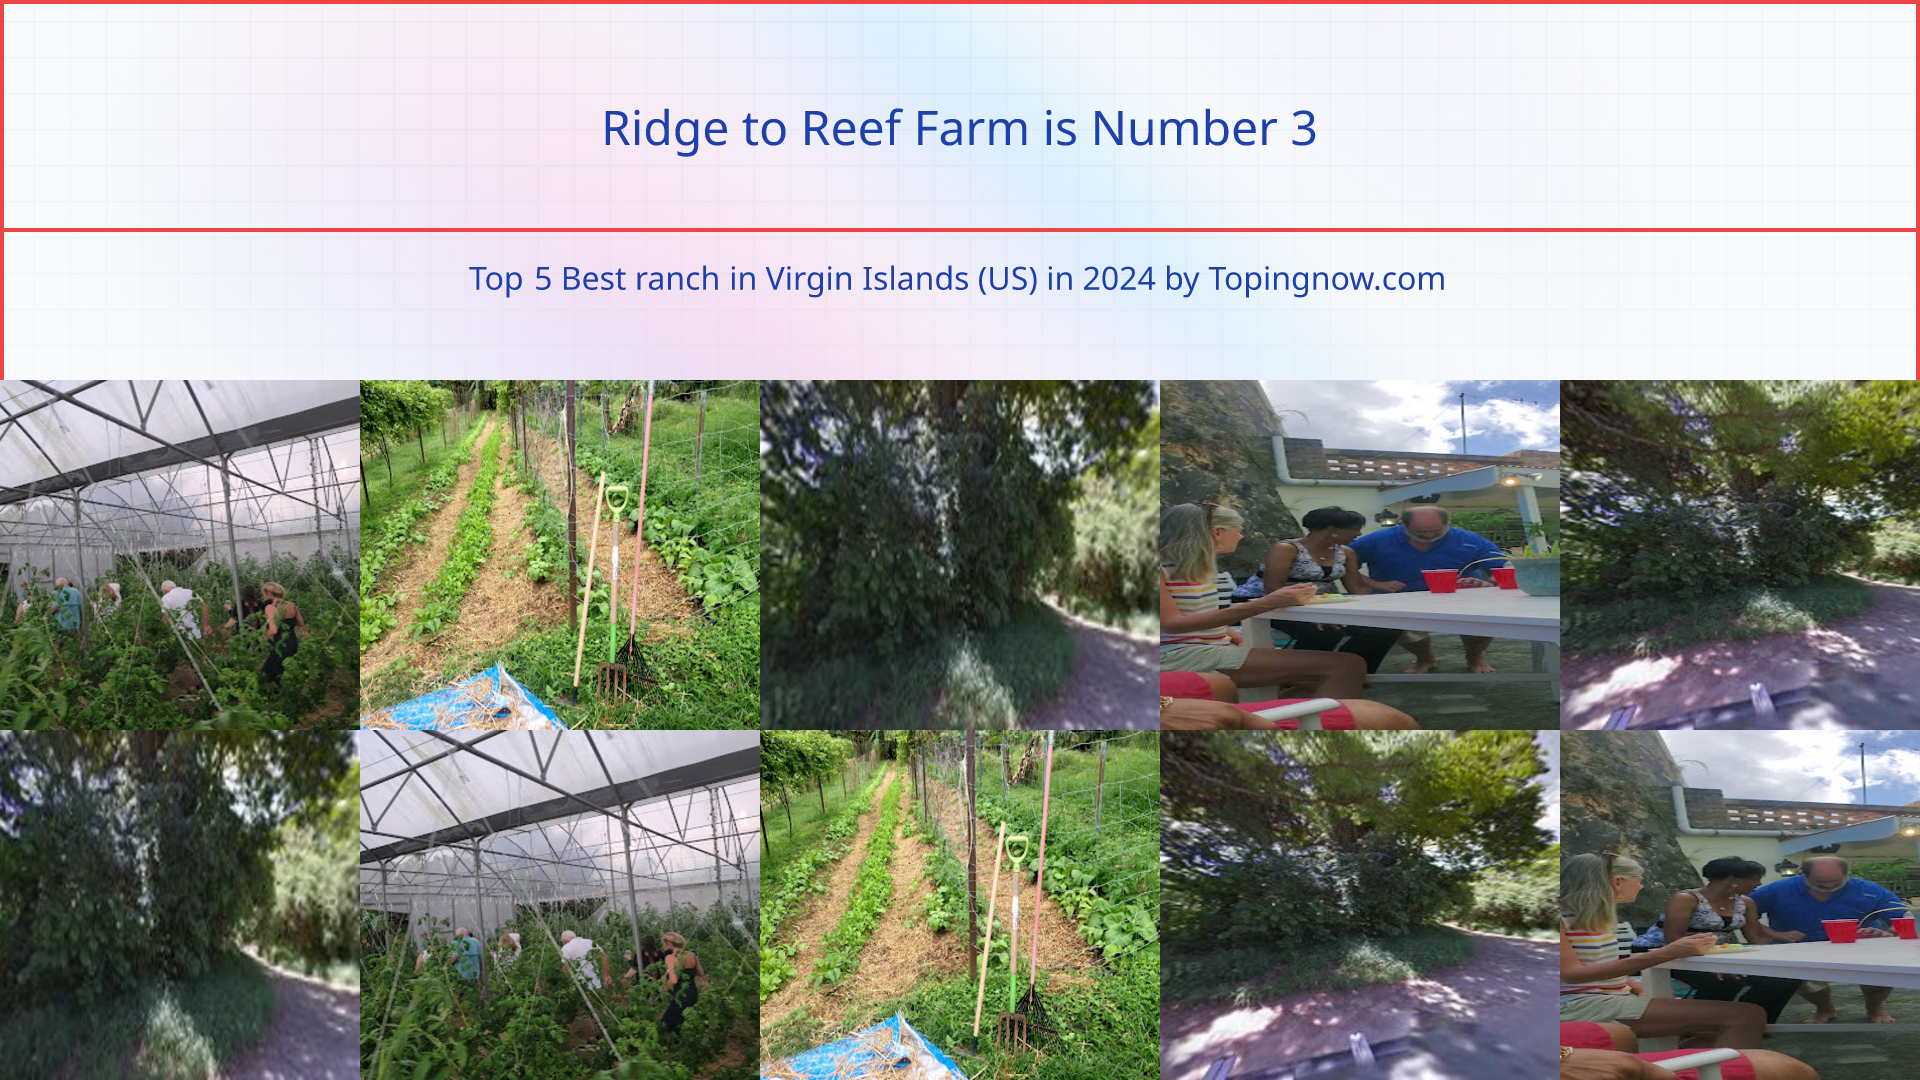 Ridge to Reef Farm: Top 5 Best ranch in Virgin Islands (US) in 2024